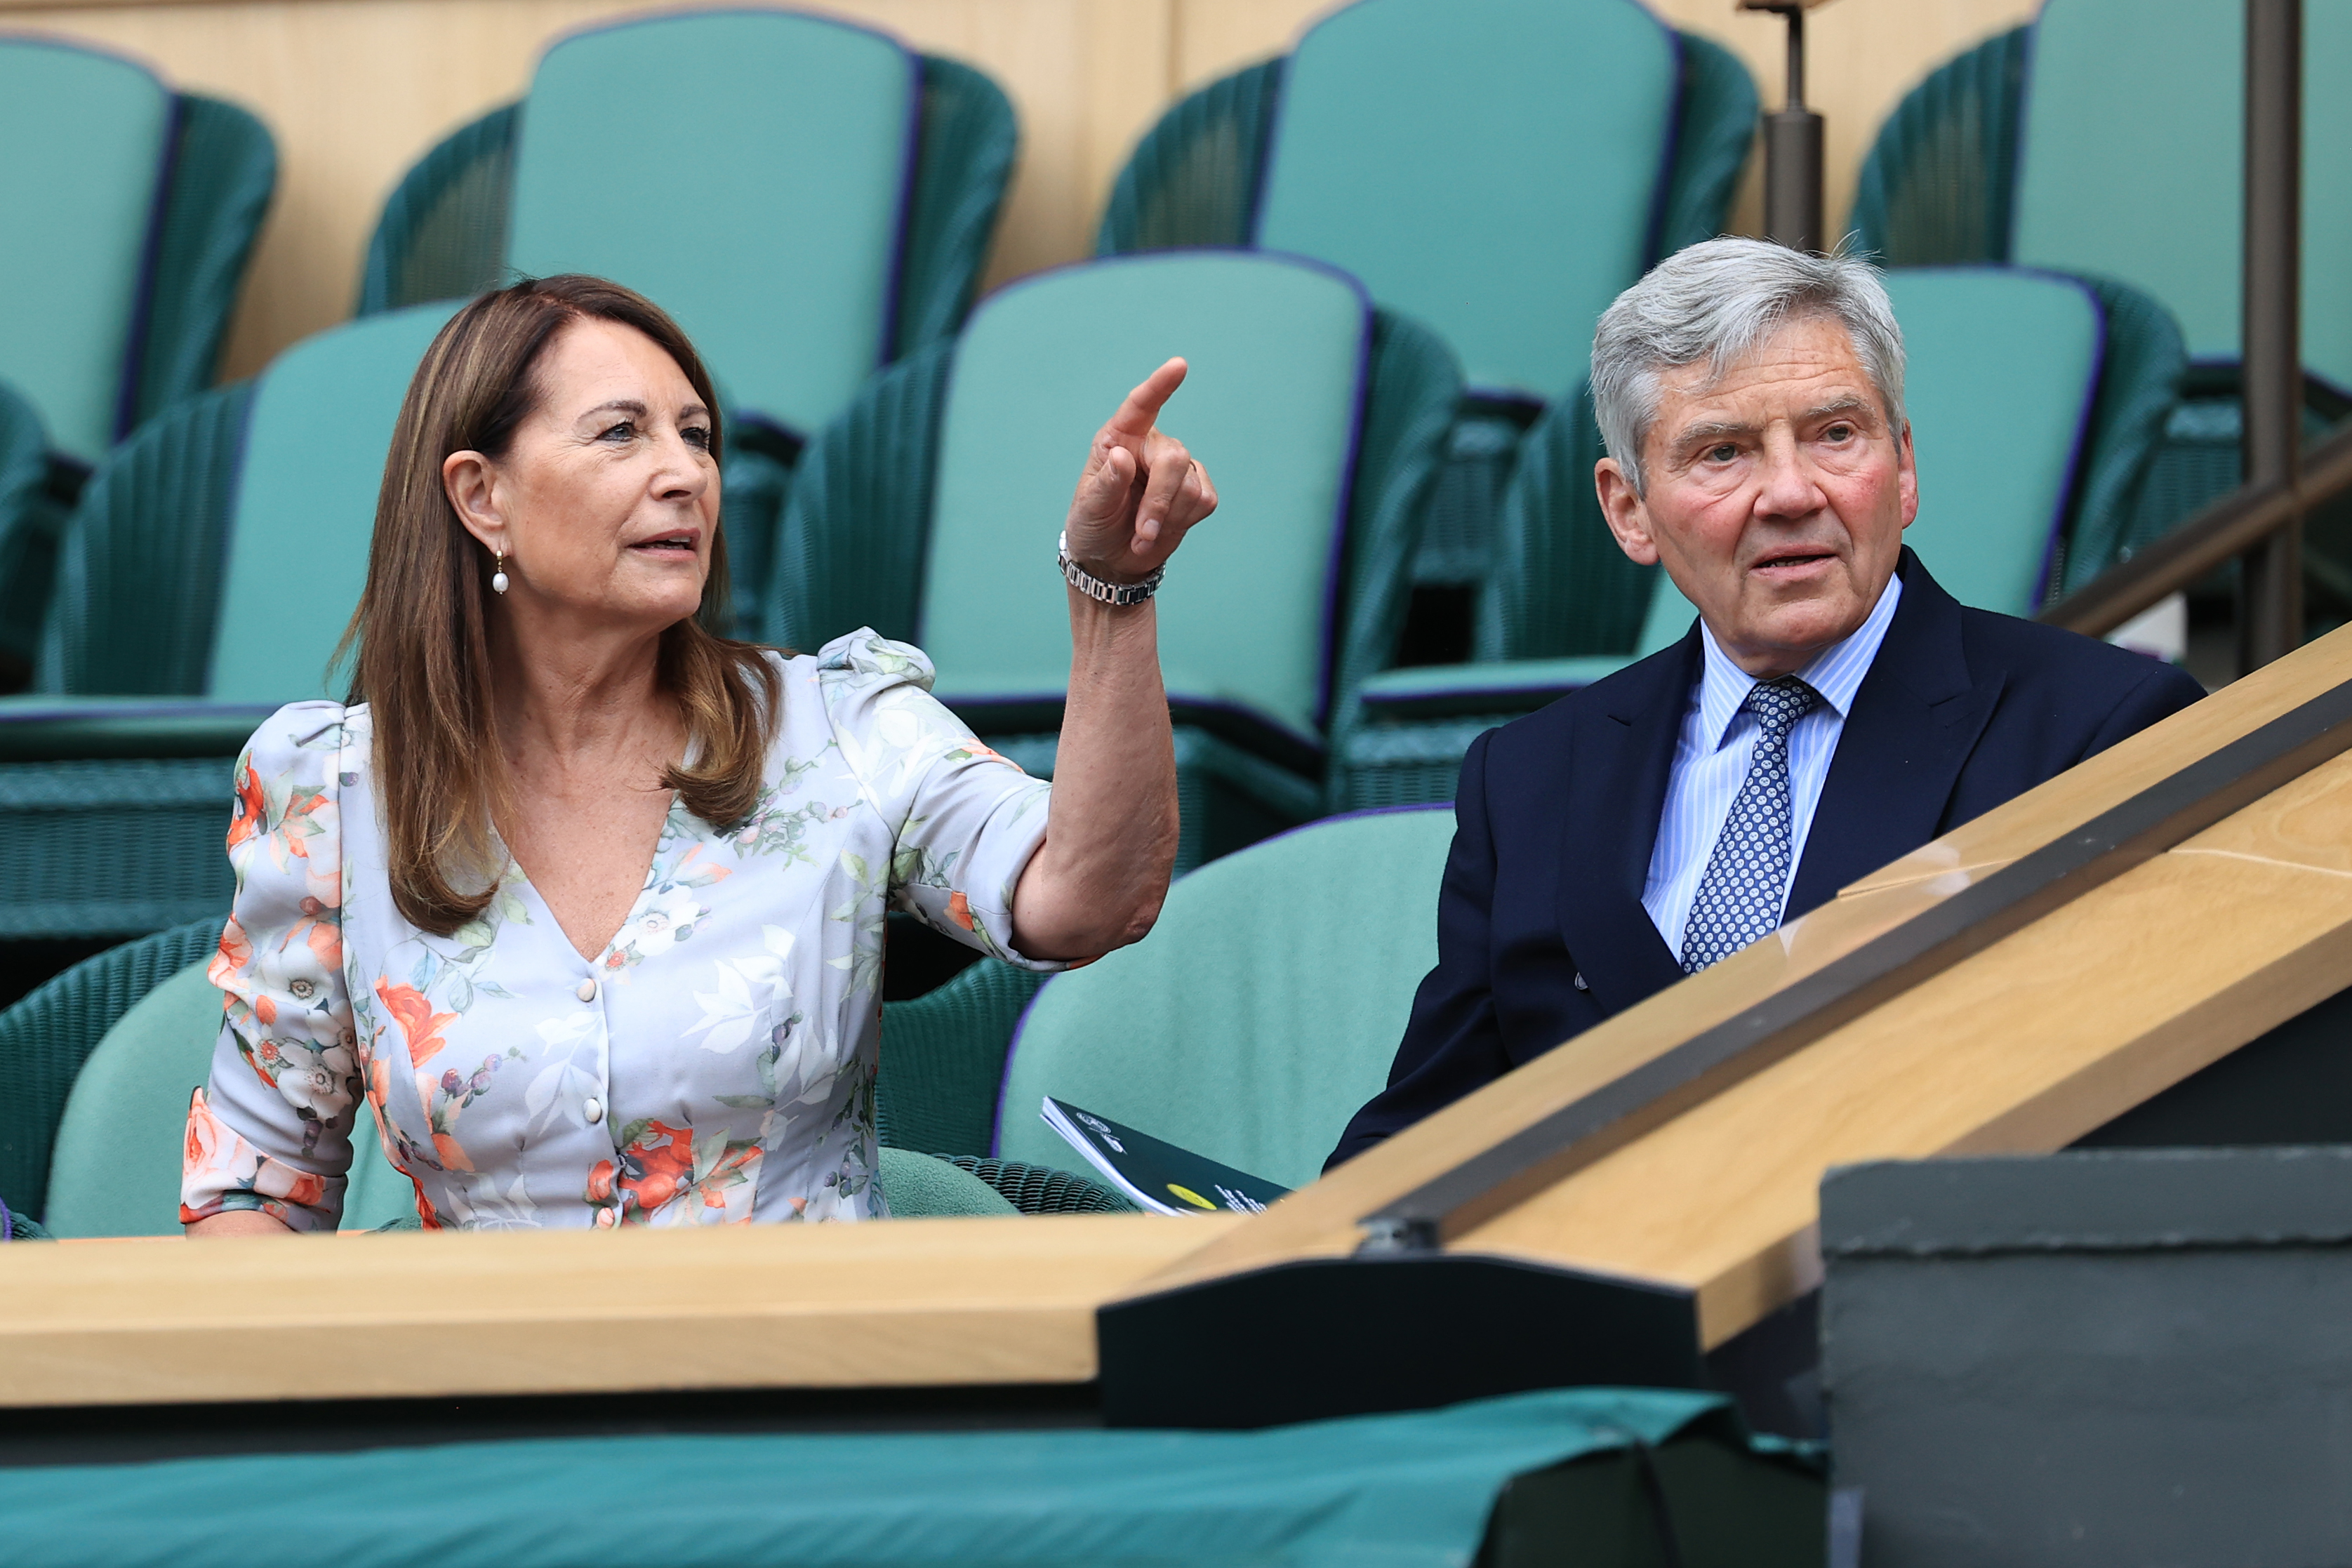 Carole und Michael Middleton während Tag neun der Wimbledon Championships 2022 in London, England, am 5. Juli 2022. | Quelle: Getty Images